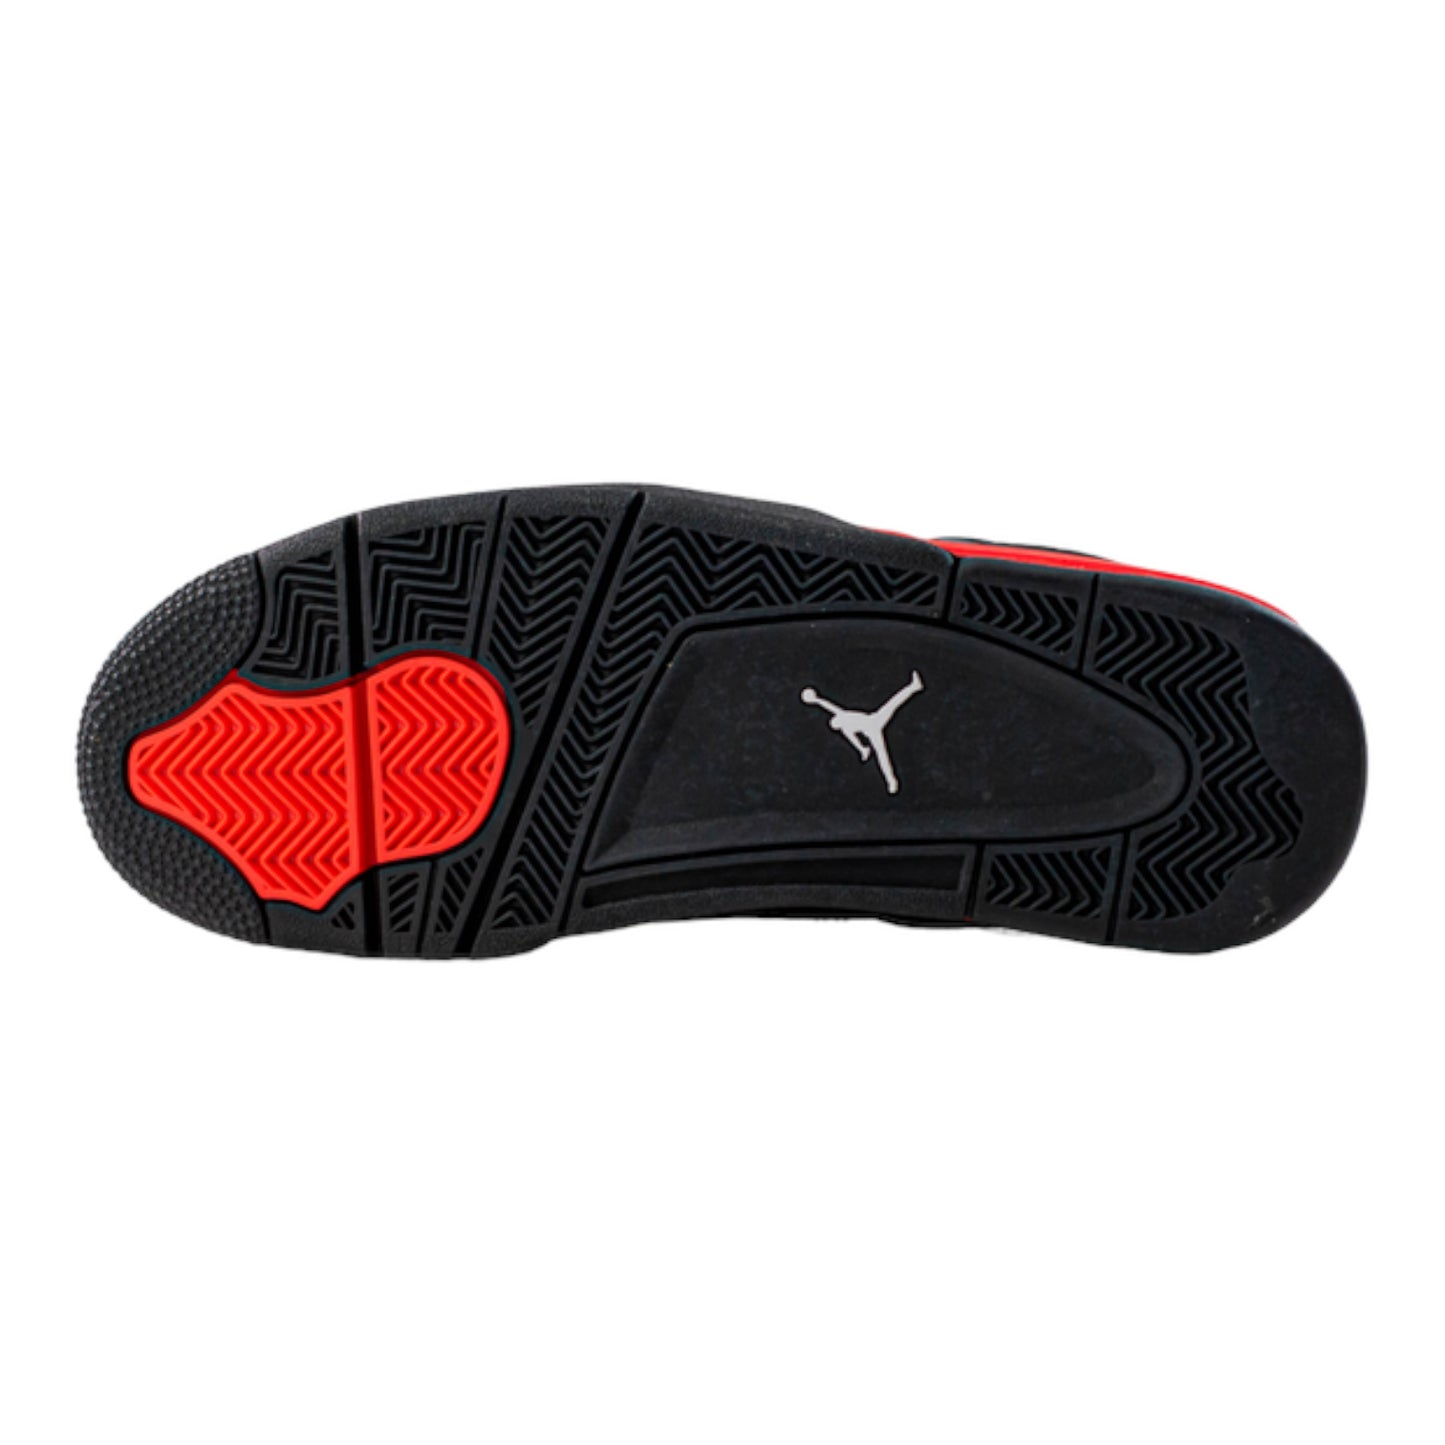 Jordan 4 Retro ‘Red Thunders’